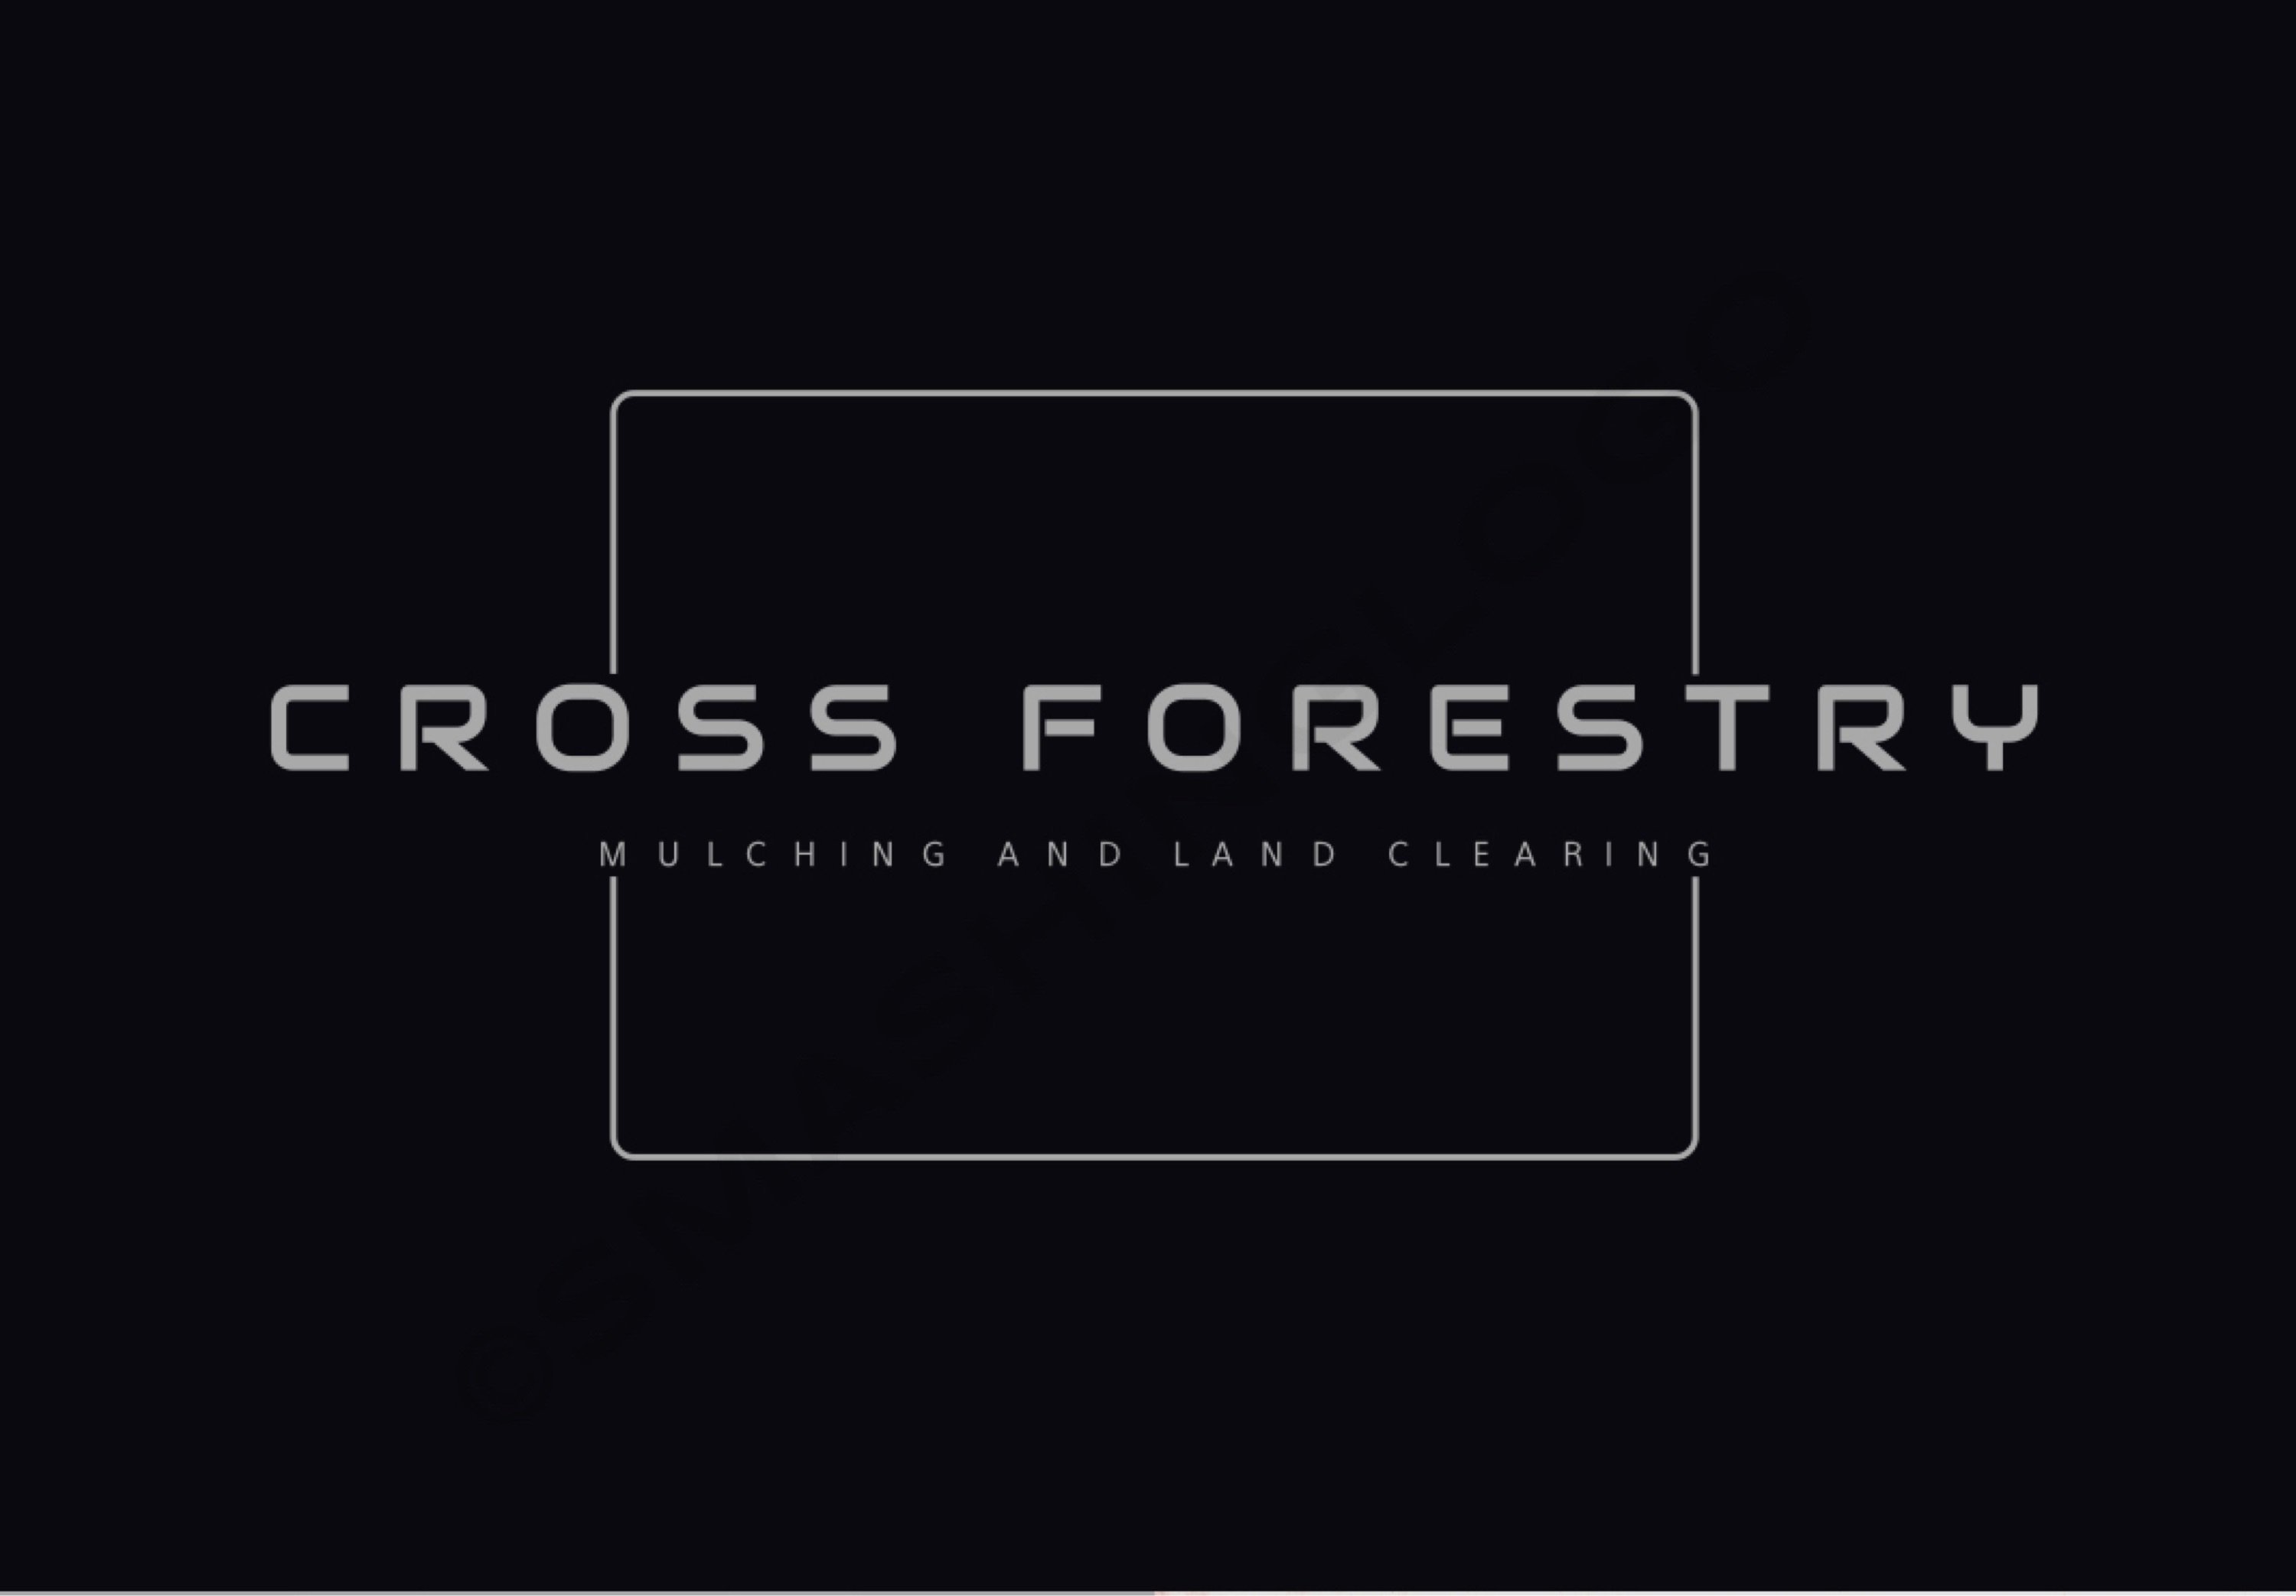 Cross Industries LLC Logo